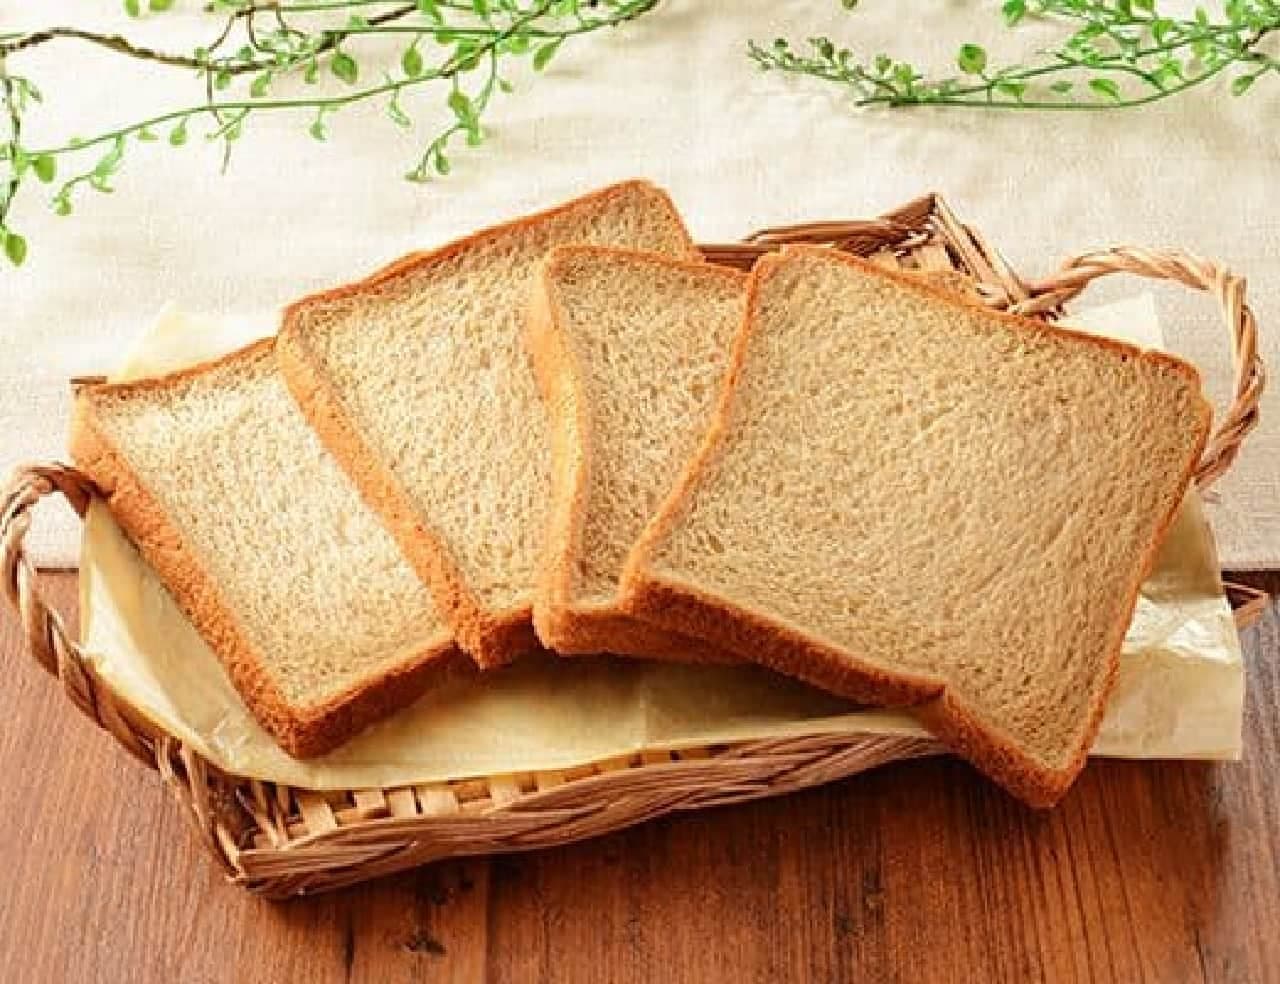 LAWSON "NL Bread with Bran 4 slices - Lactic Acid Bacteria